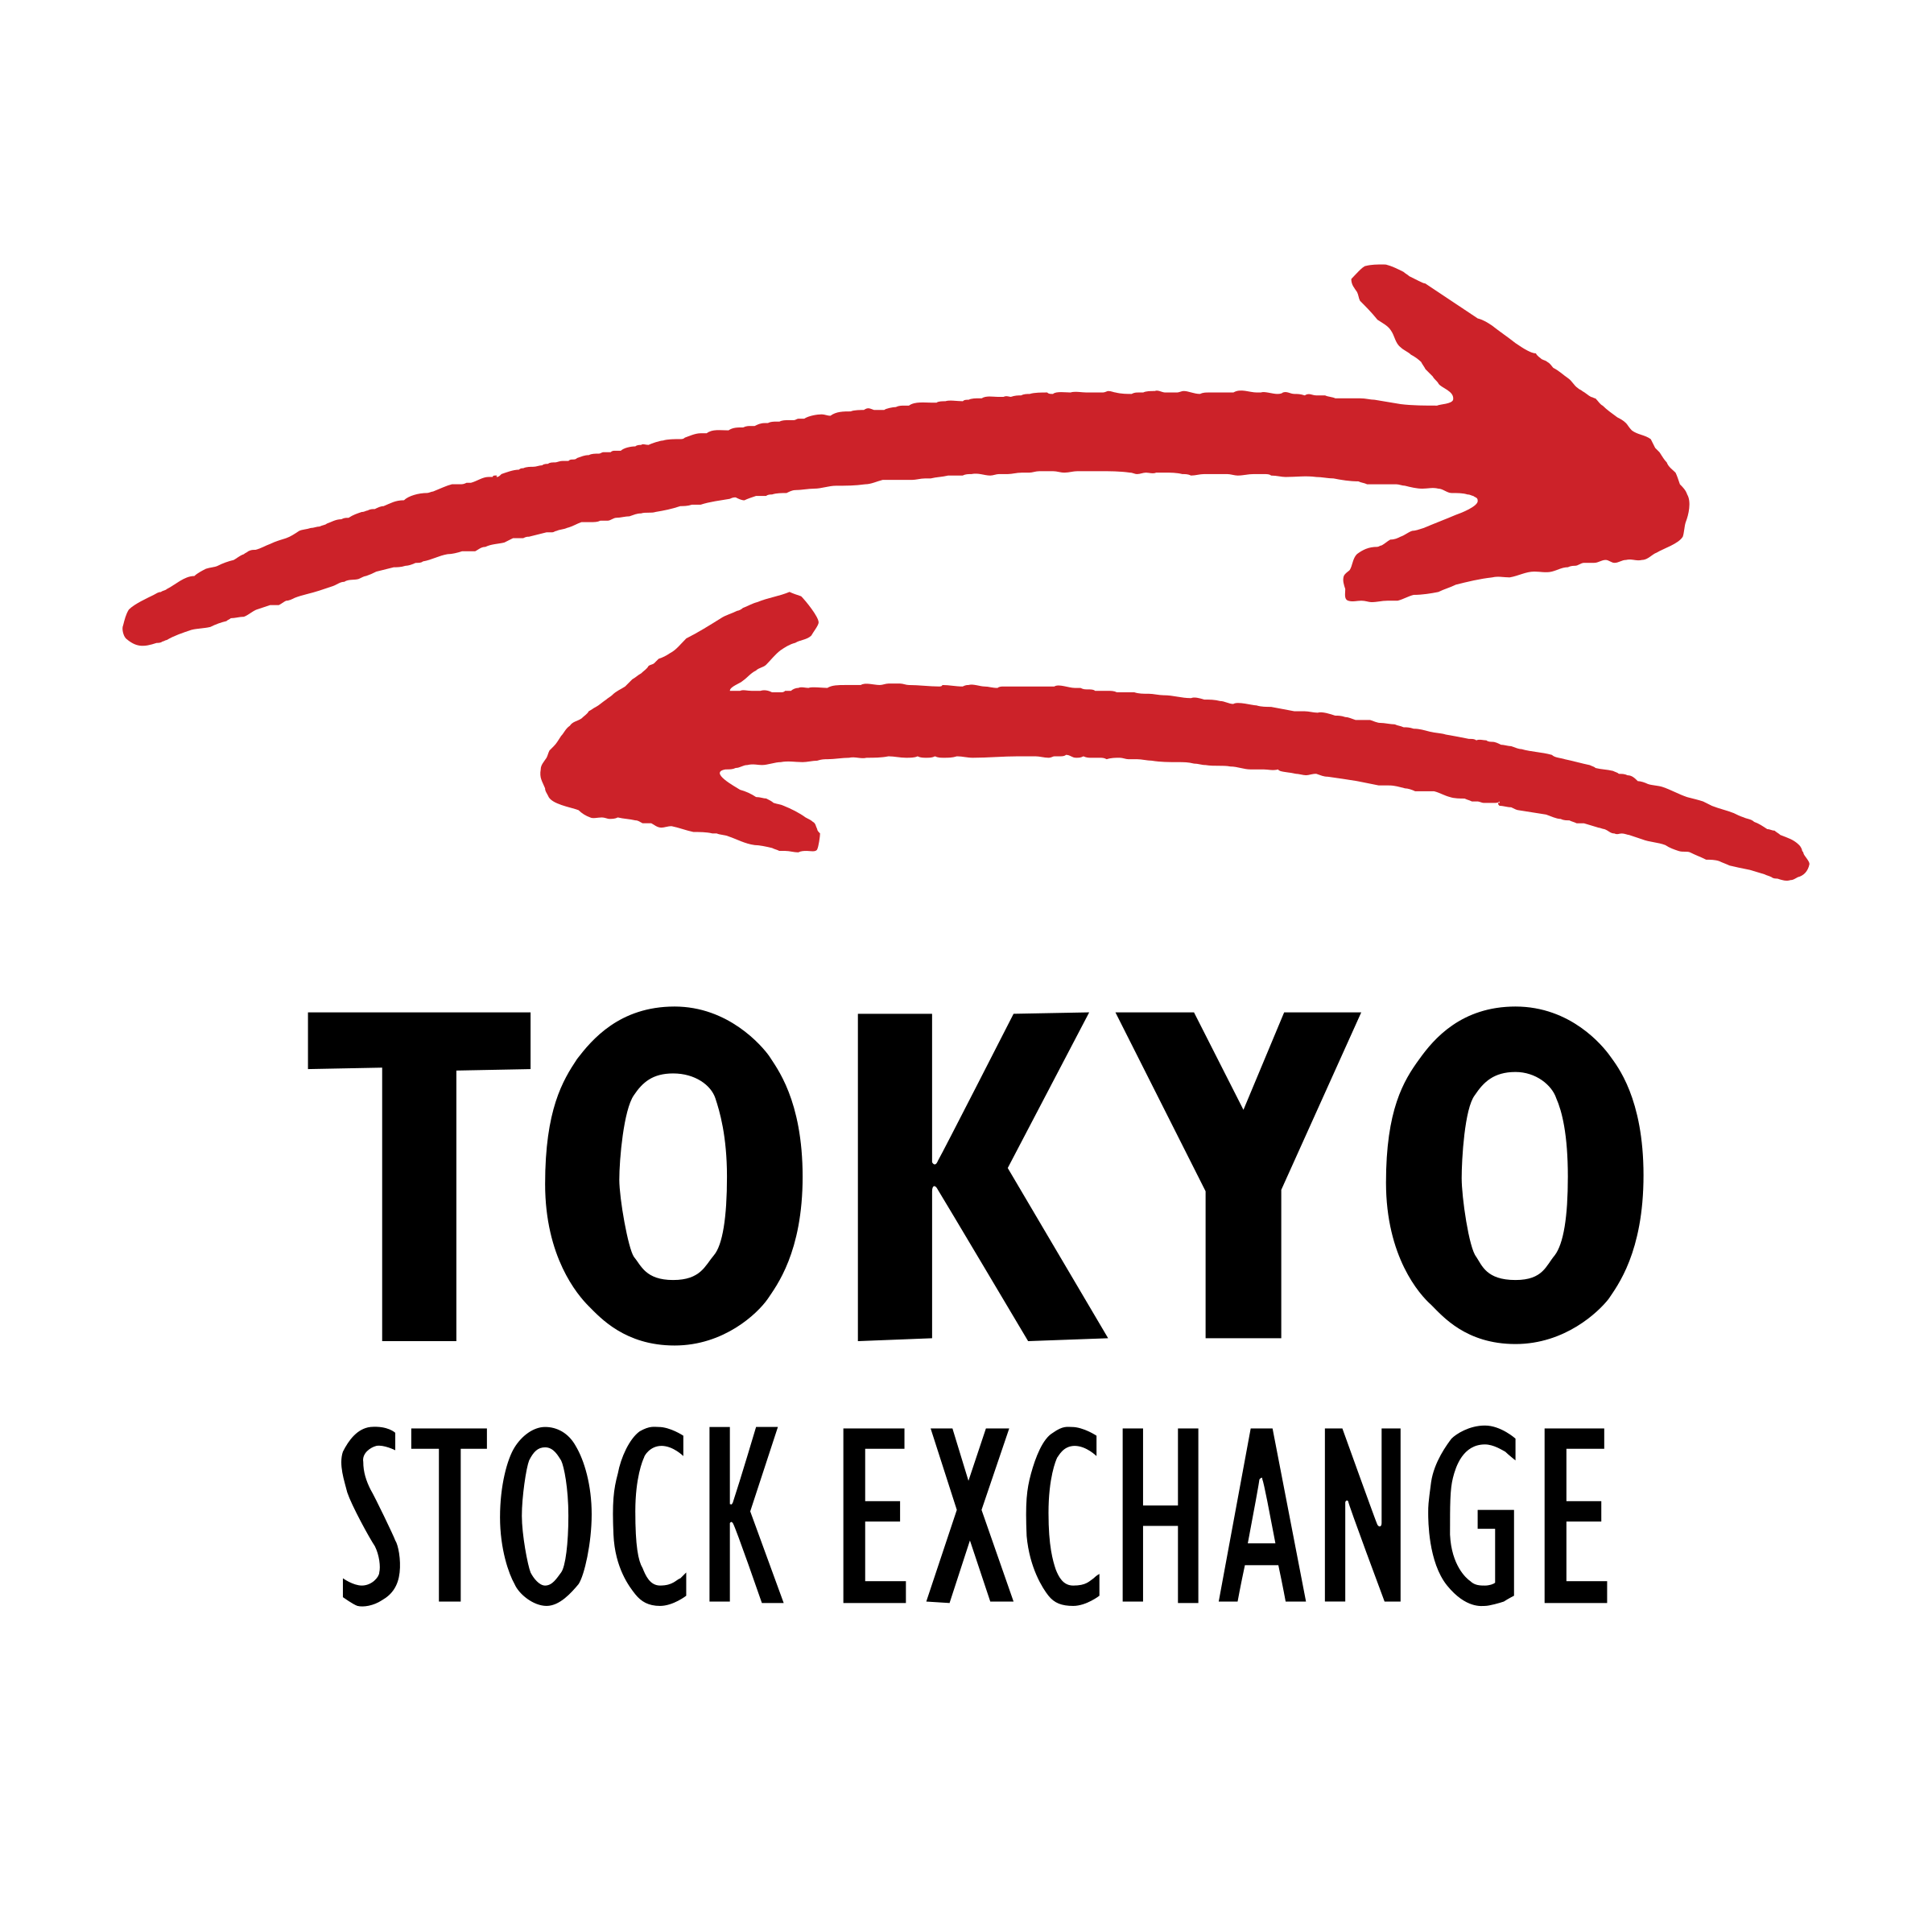 Exchange Logo - Tokyo Stock Exchange Logo PNG Transparent & SVG Vector - Freebie Supply